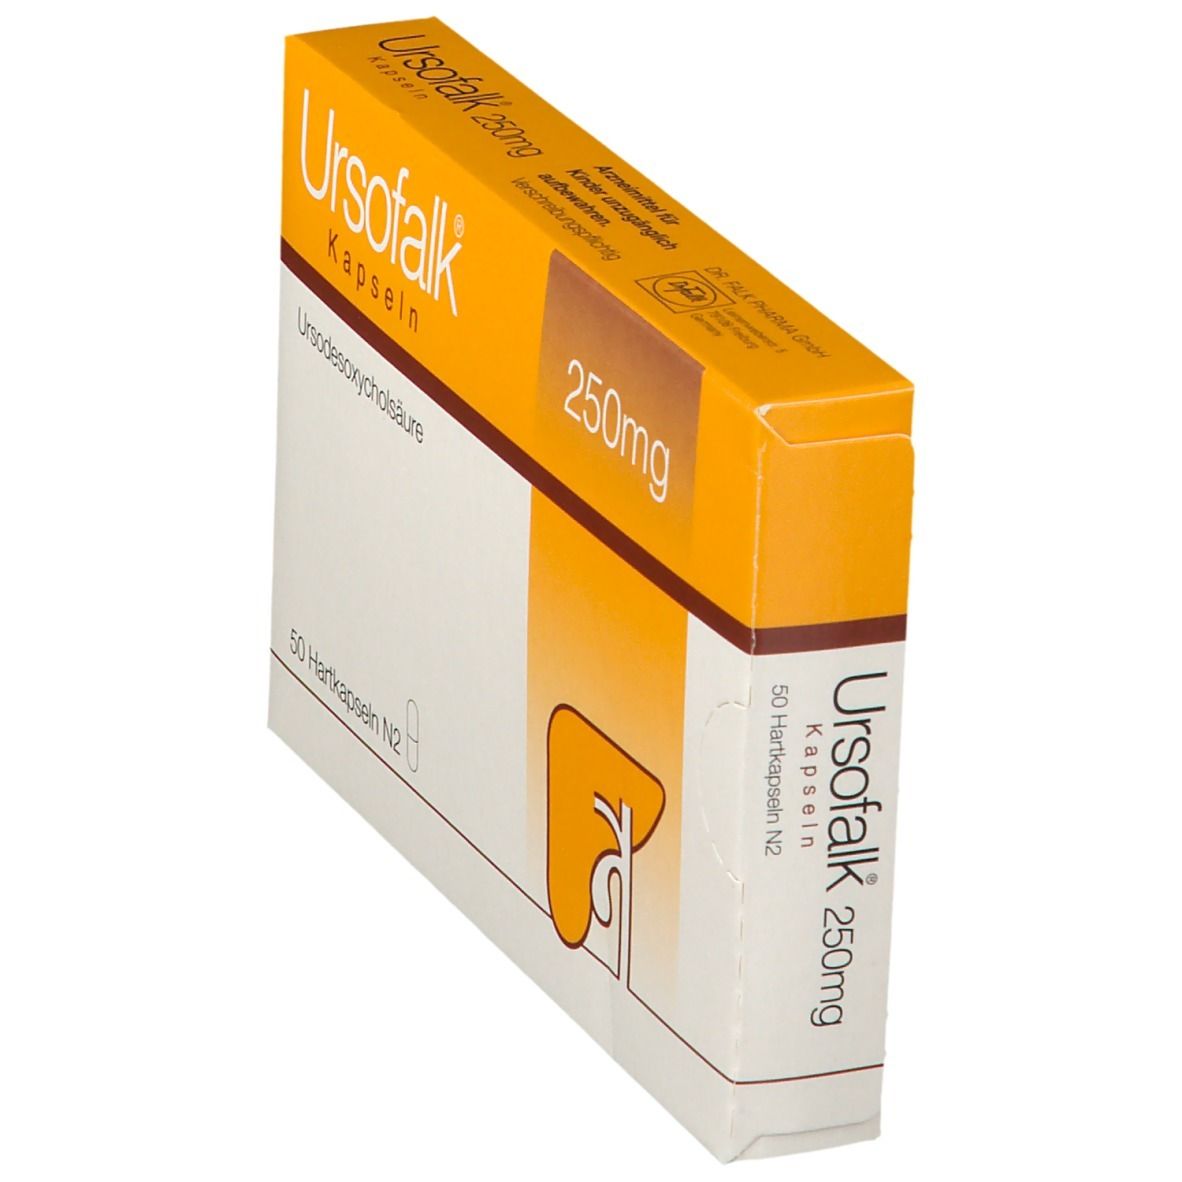 Ursofalk® 250 mg